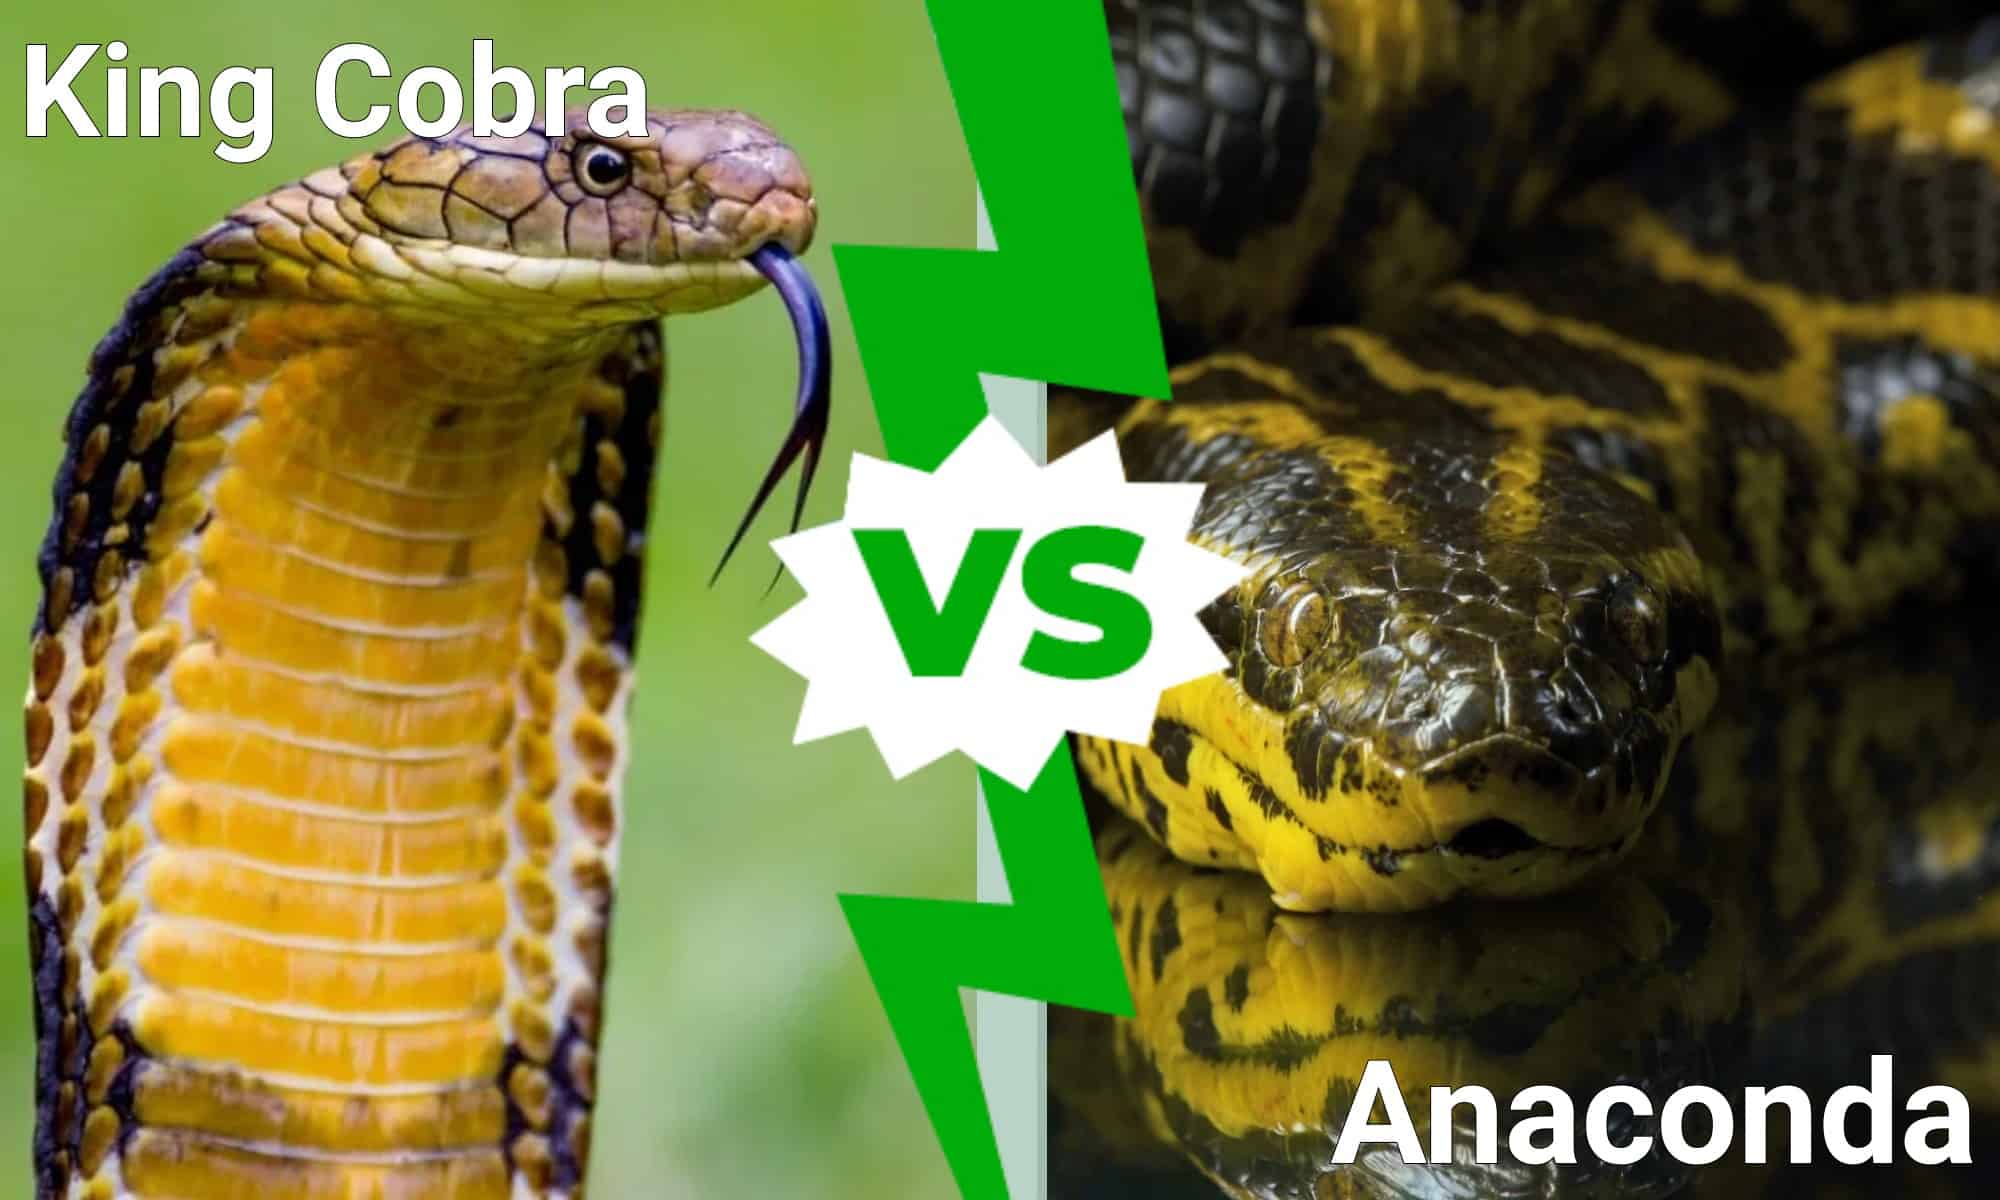 Anaconda versus king cobra